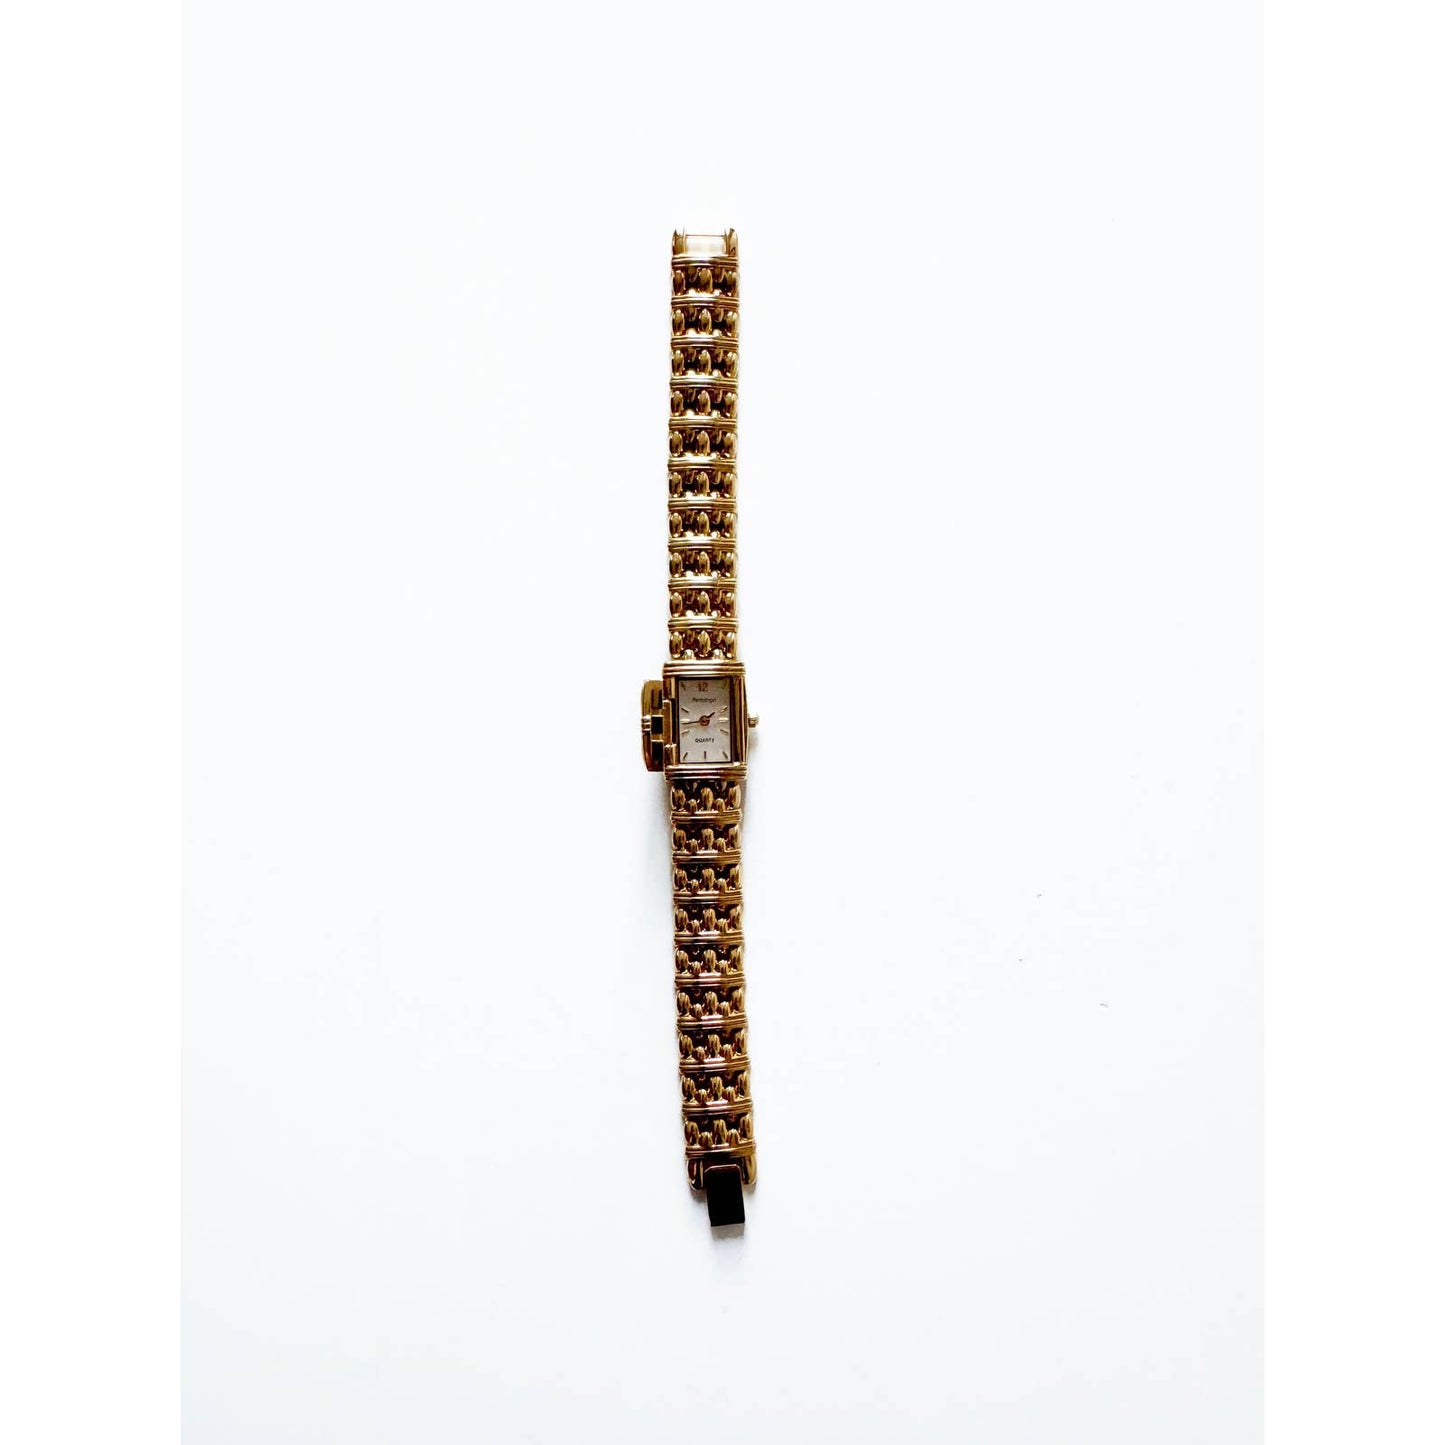 Vintage Gold Bracelet Watch with Rectangular Face | Armitron